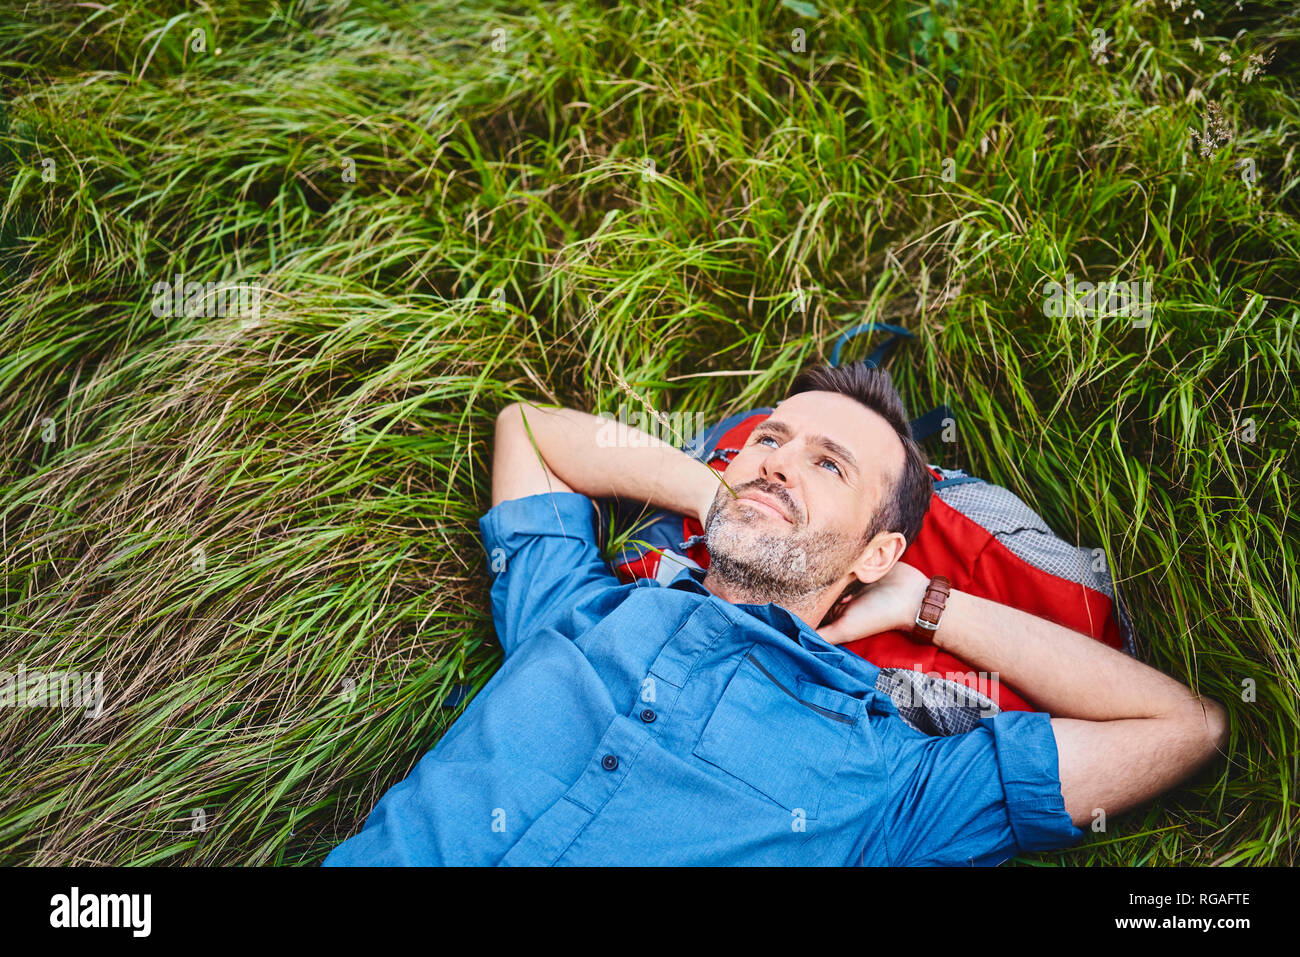 Relaxed man lying in grass enjoying hiking trip Stock Photo